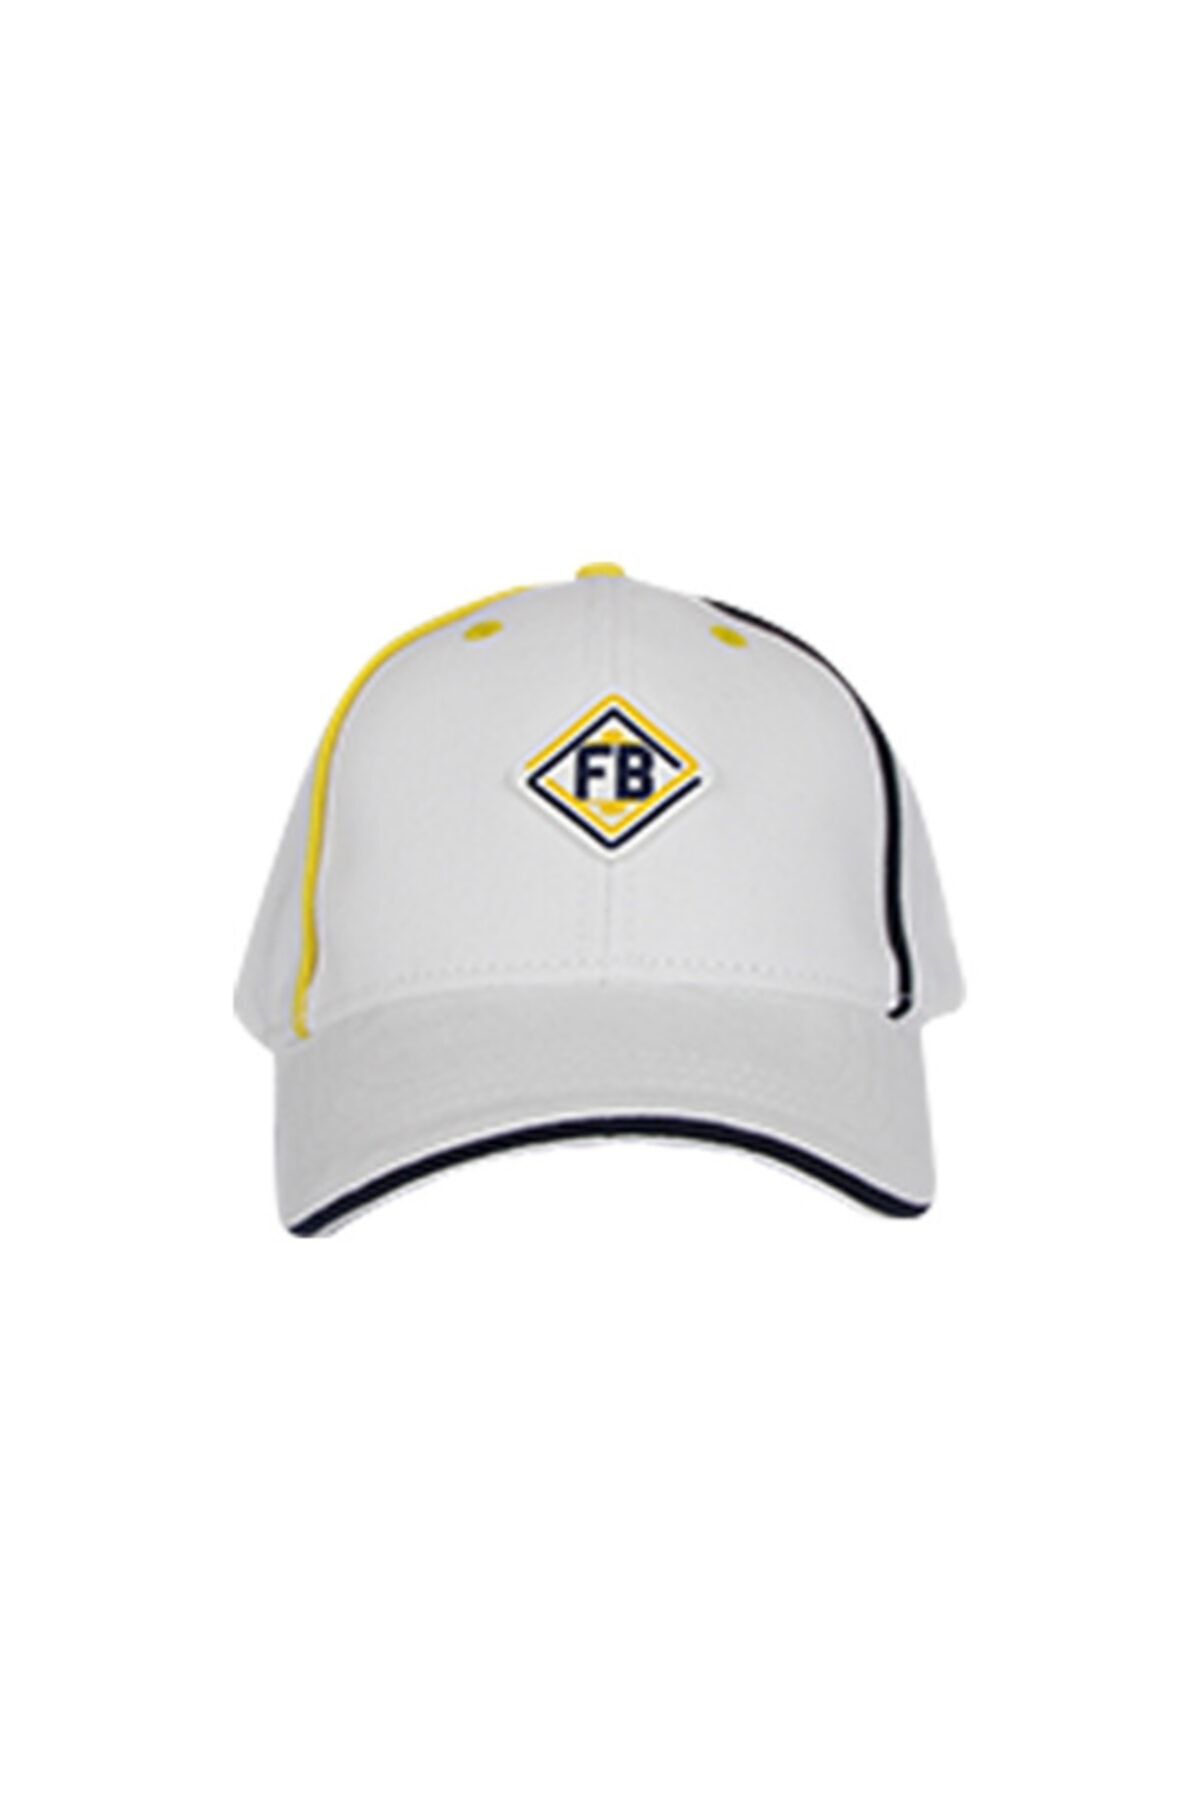 Fenerbahçe Çocuk Fb Kauçuk Logo Şapka